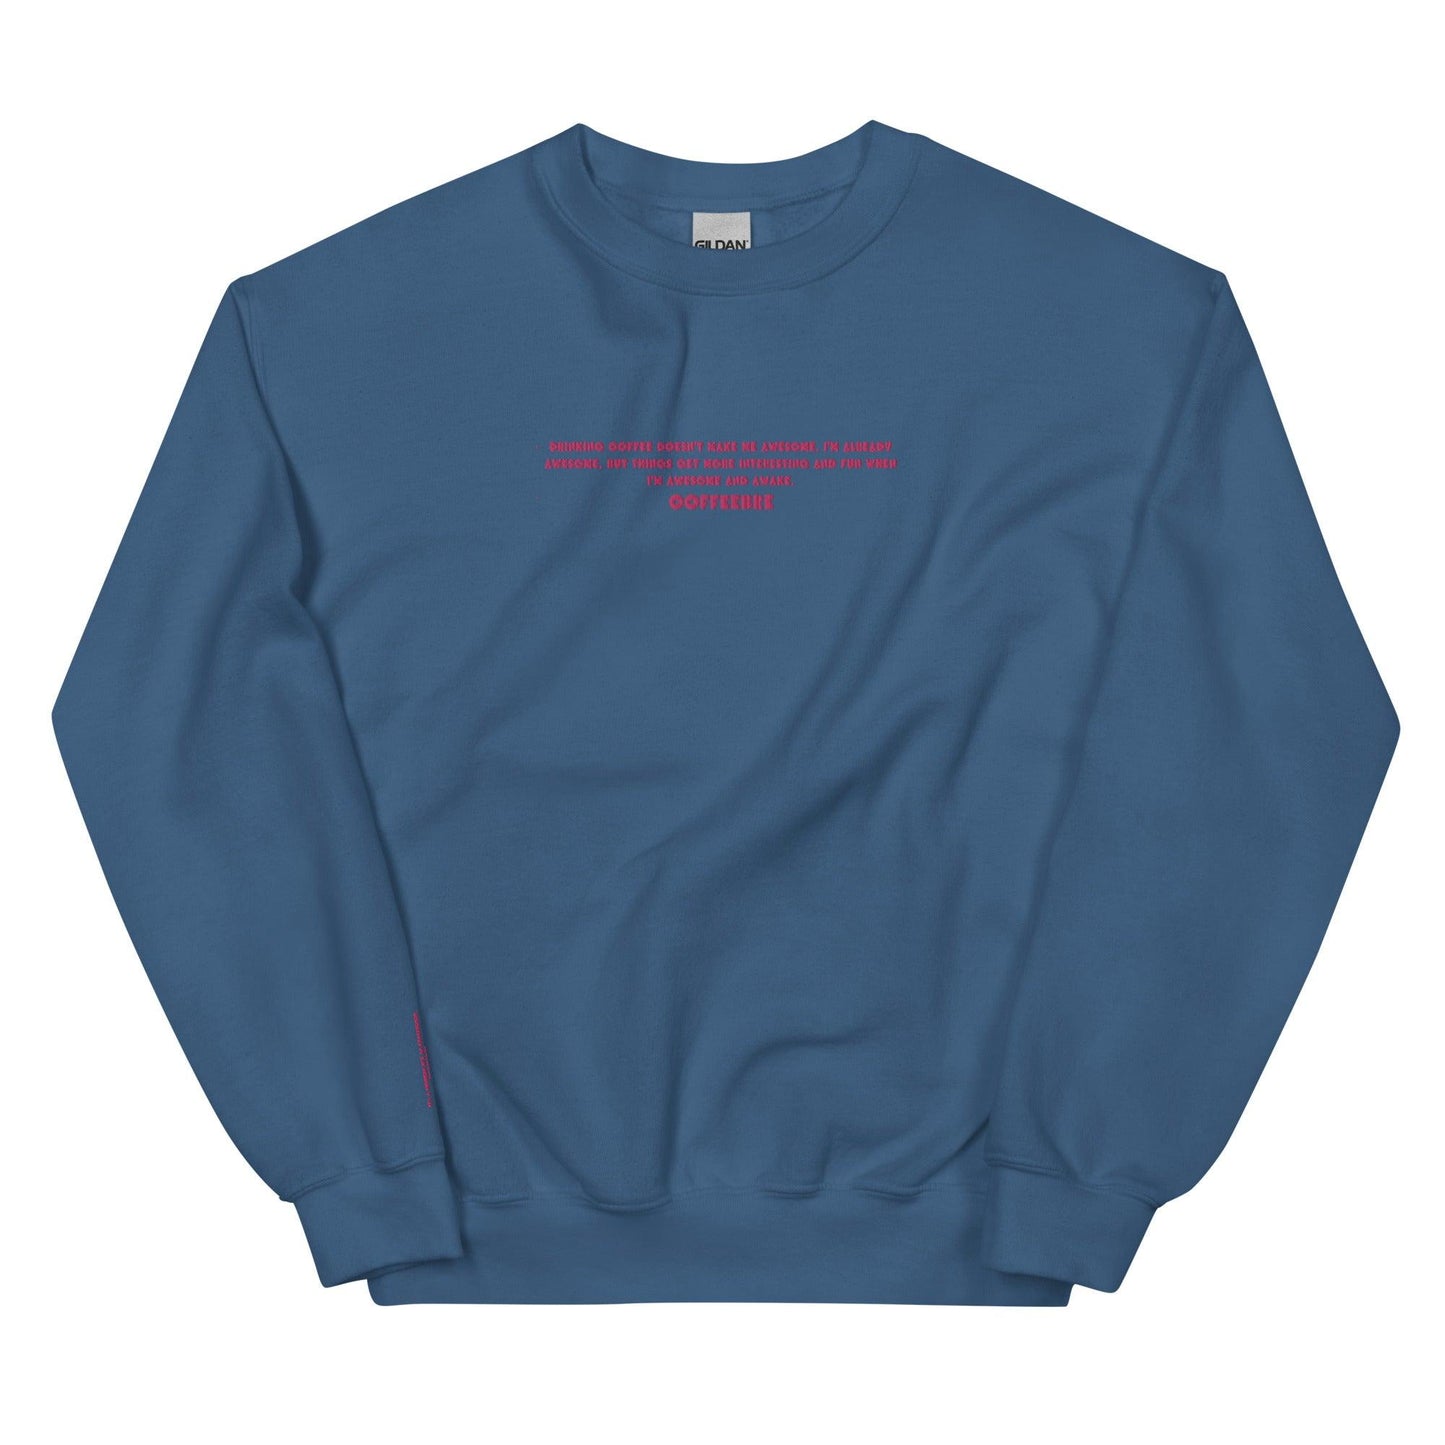 Embroidered Long Sleeve Unisex Sweatshirt - COFFEEBRE